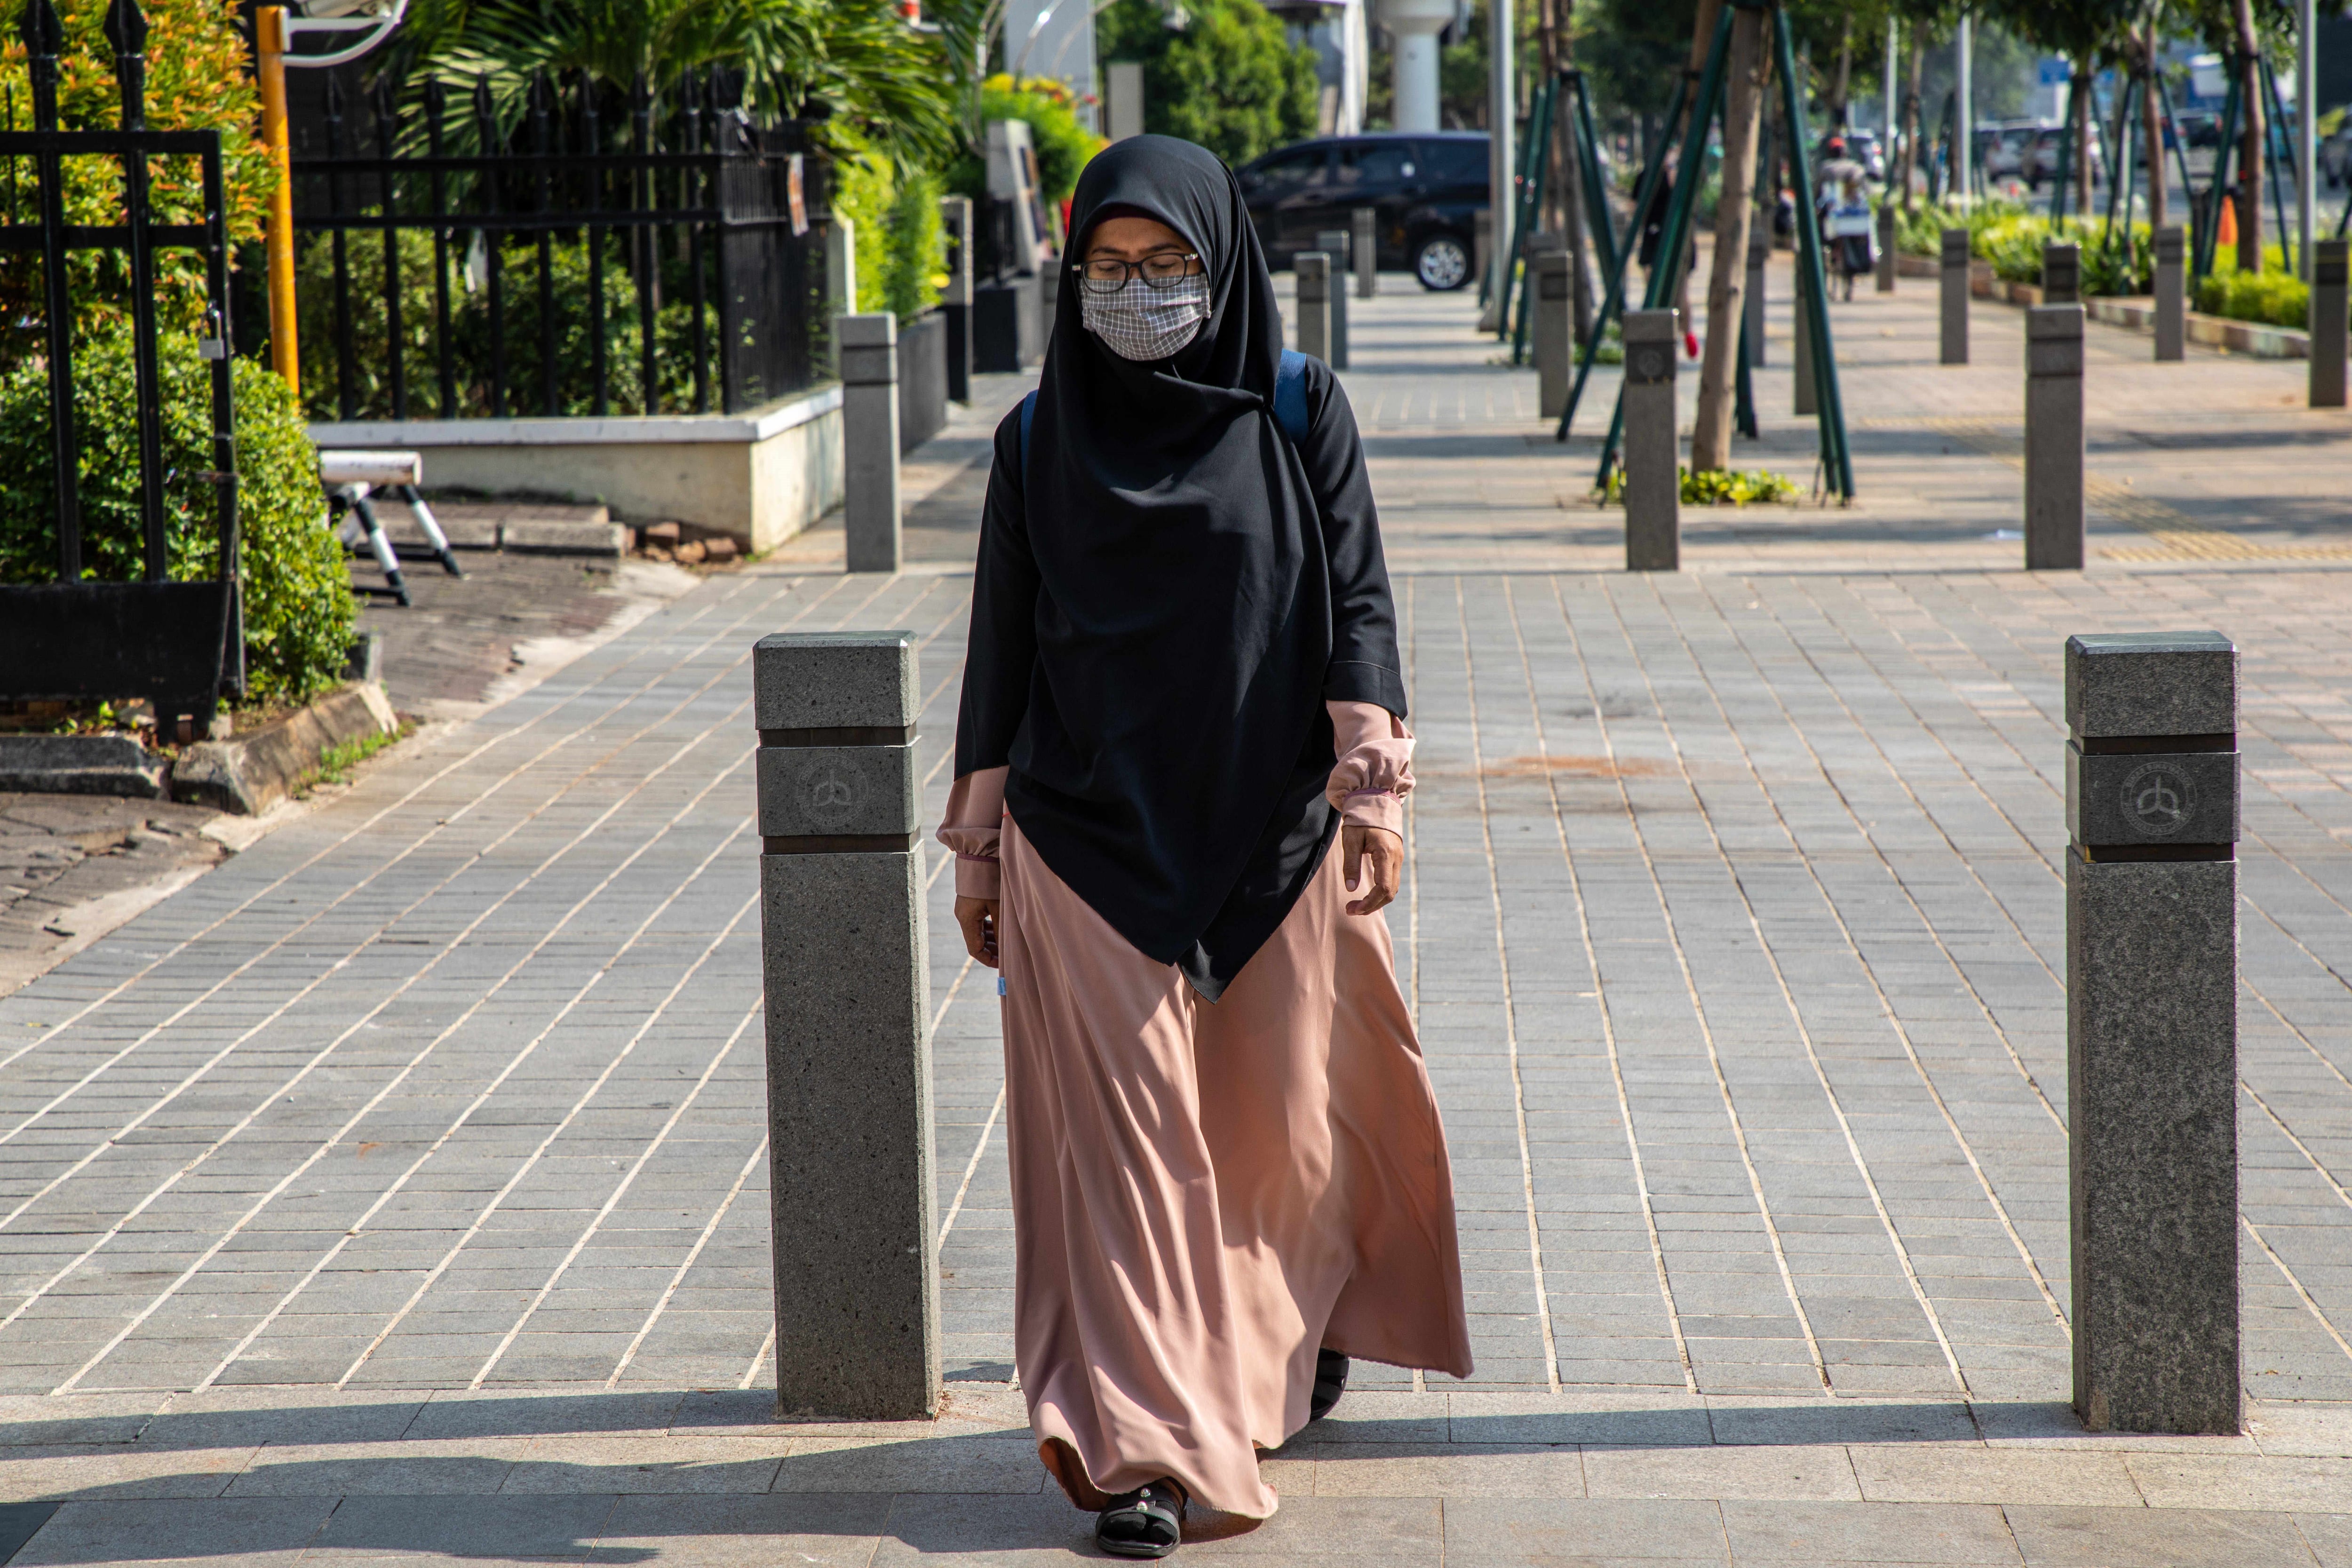 05/02/2021 Una mujer cruza un paso de peatones en Indonesia. POLITICA ASIA INDONESIA INTERNACIONAL DONAL HUSNI / ZUMA PRESS / CONTACTOPHOTO 